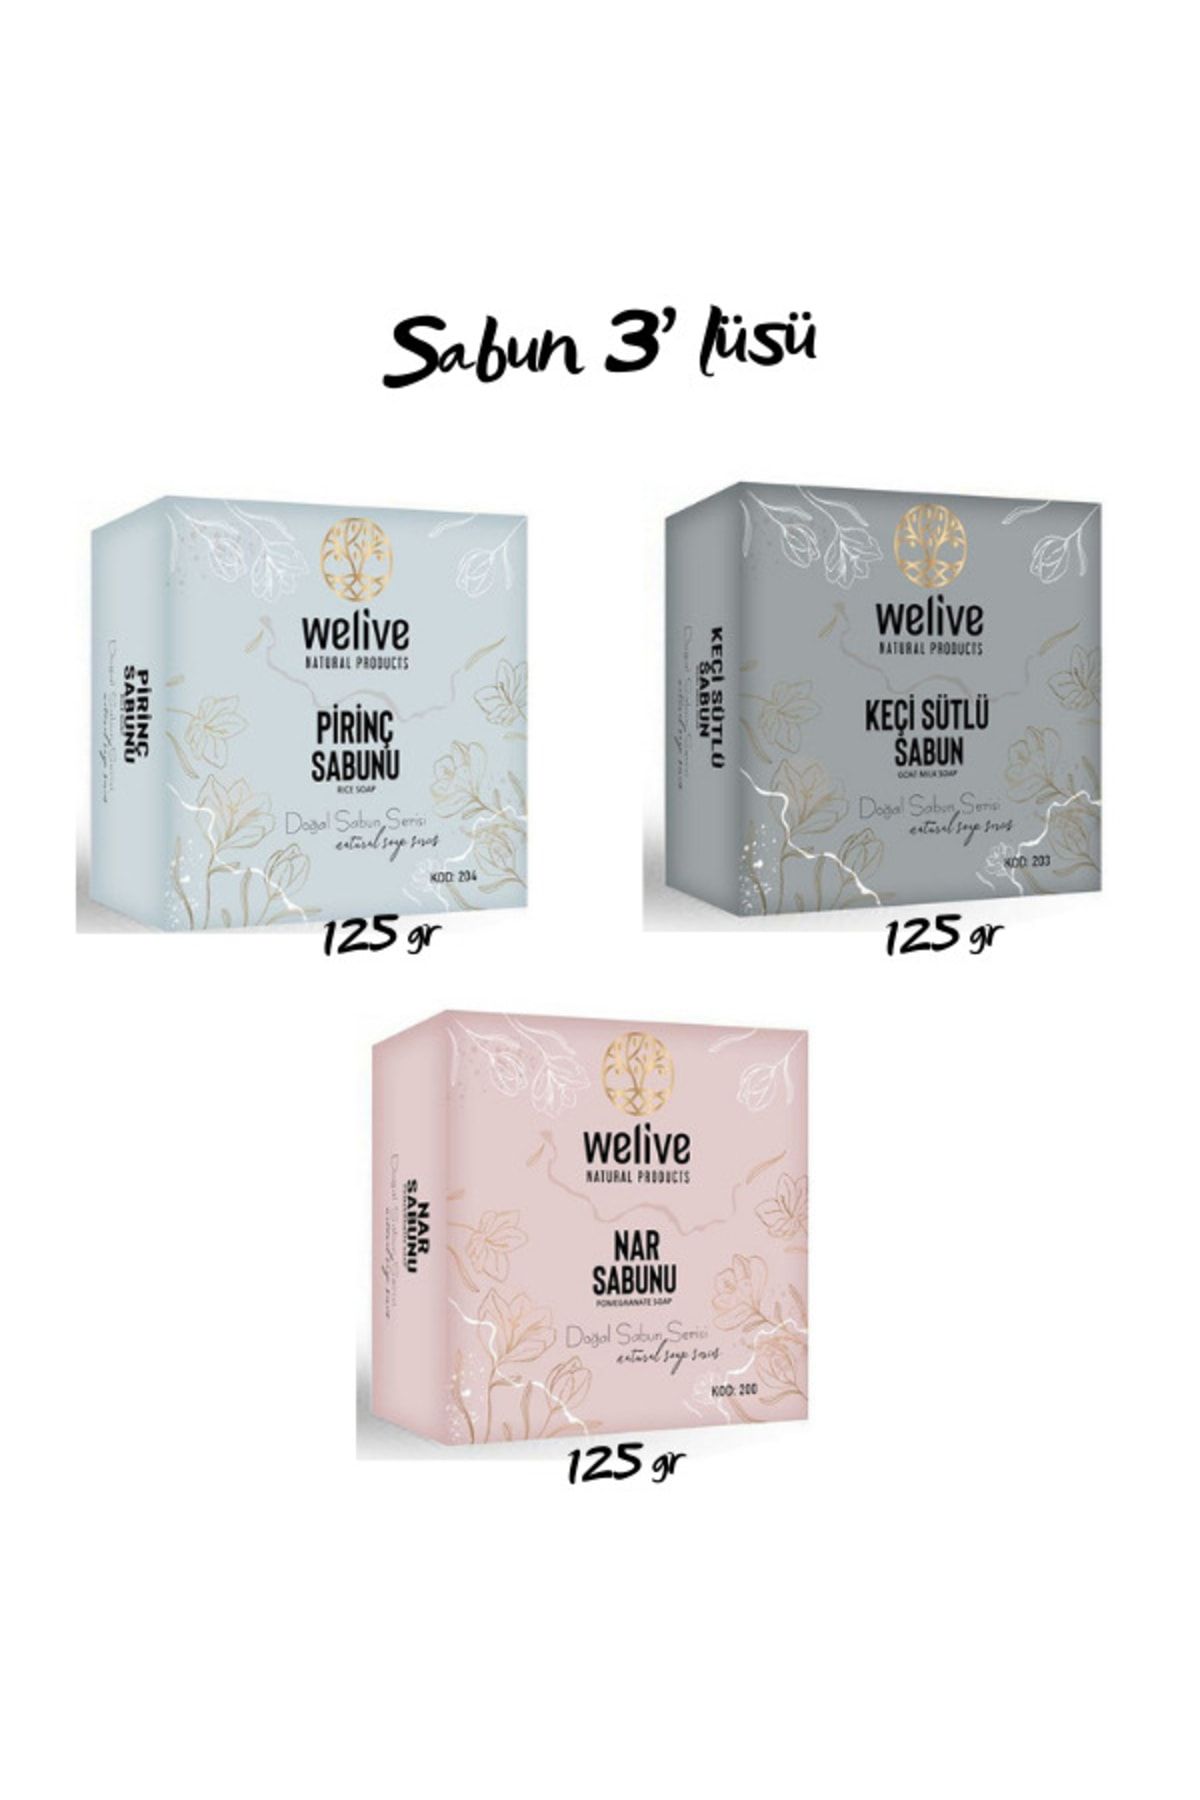 Welive Nar Sabunu-pirinç Sabunu-keçi Sütlü Sabun 3'lü Set (3x125gr)